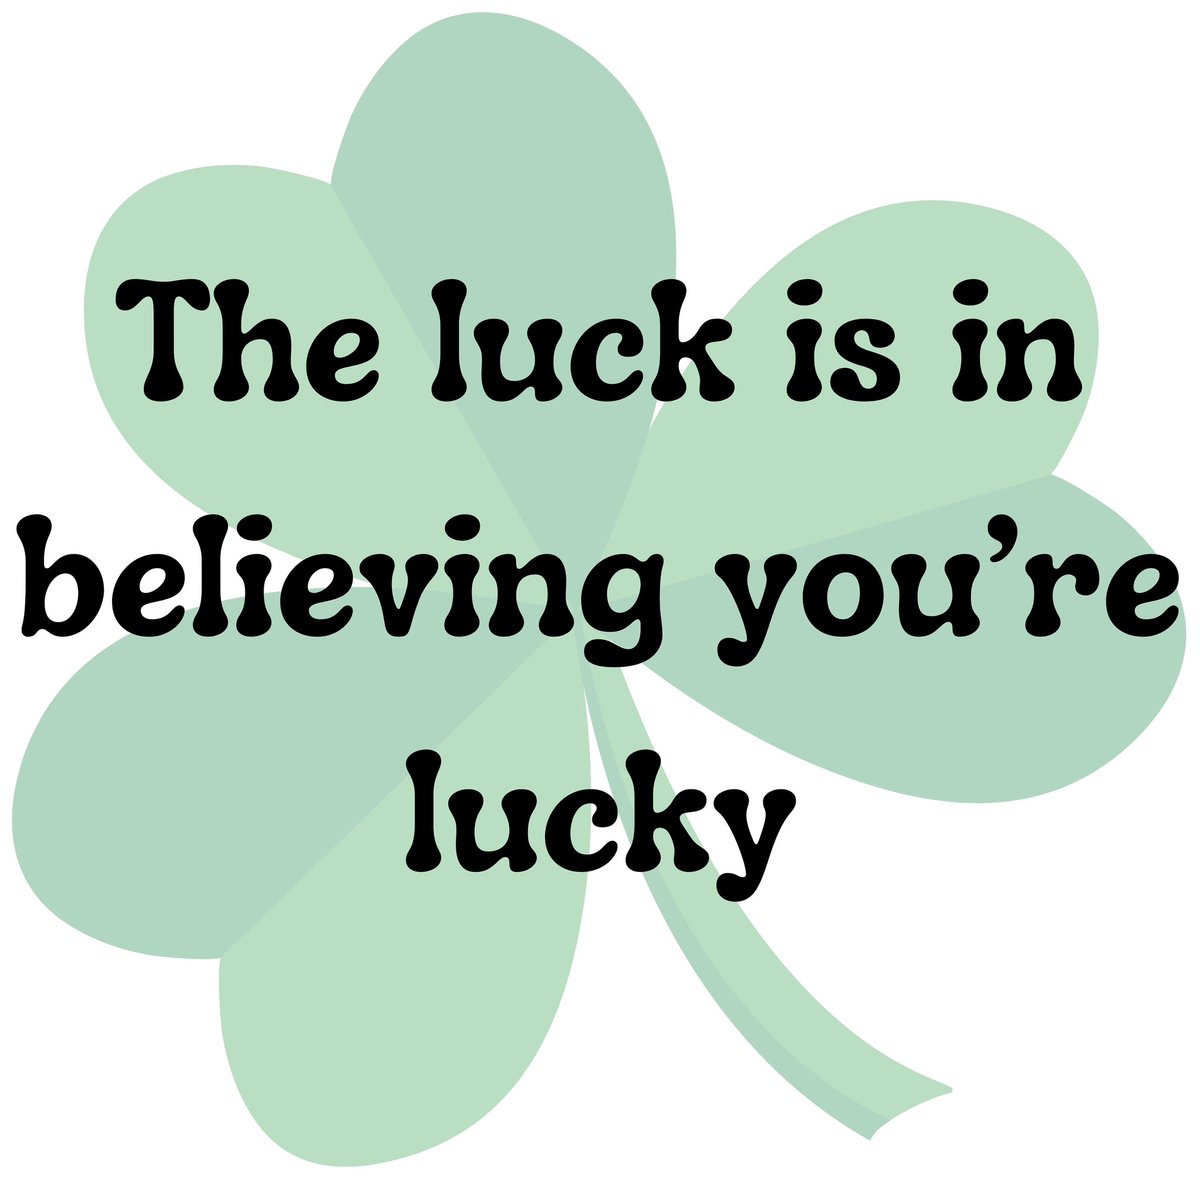 Comment below if you feel lucky 🍀 

#irishpun #irishdance #irishphotography #irish #irishpassion #irishgifts #irishdecor #saintpatrickdays #saintpatricksdaydecor #irishgift  #saintpatricksday🍀 #saintpatricksday2023☘️ #saintpatricksweek #thezenflower